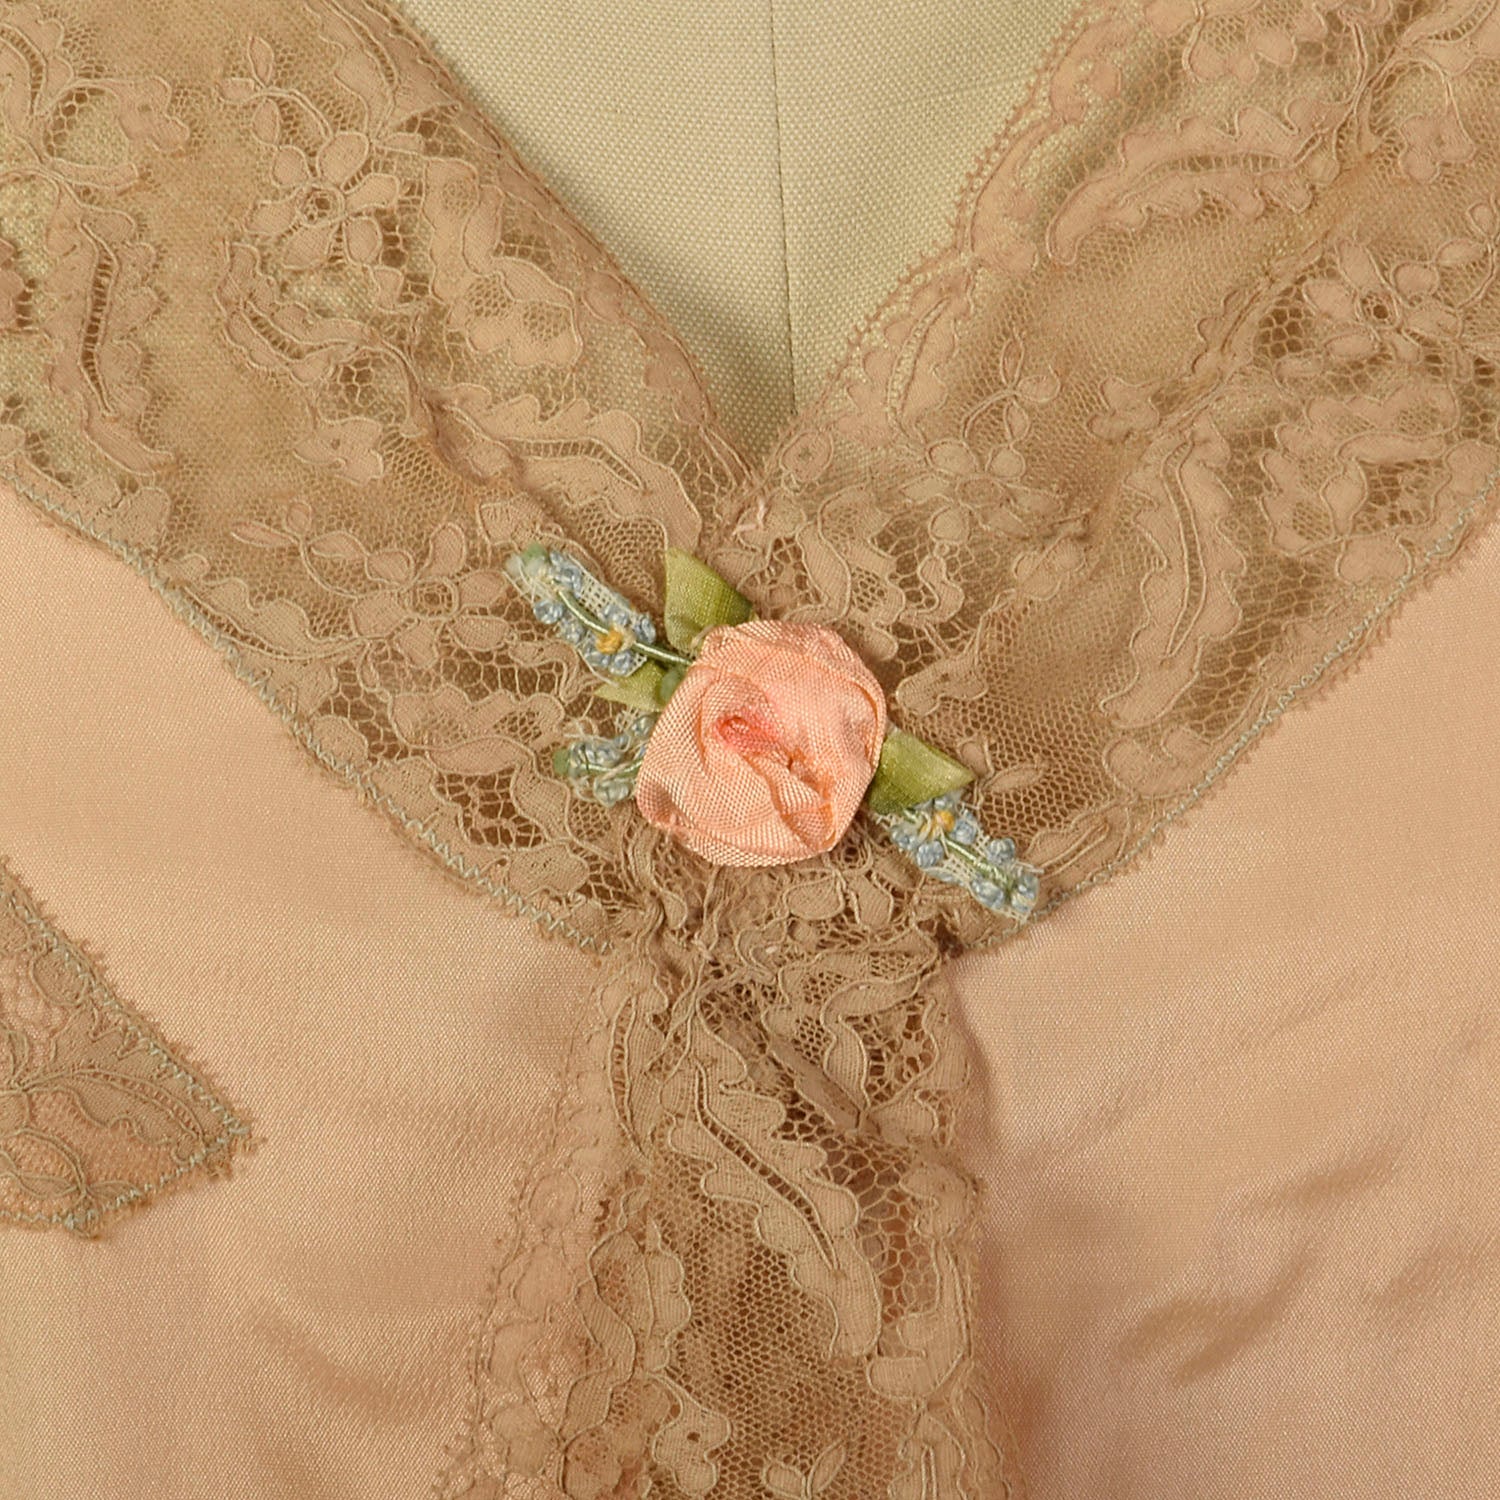 3XL 1920s Nightgown Boudoir Lingerie Peach Volup Sleeveless